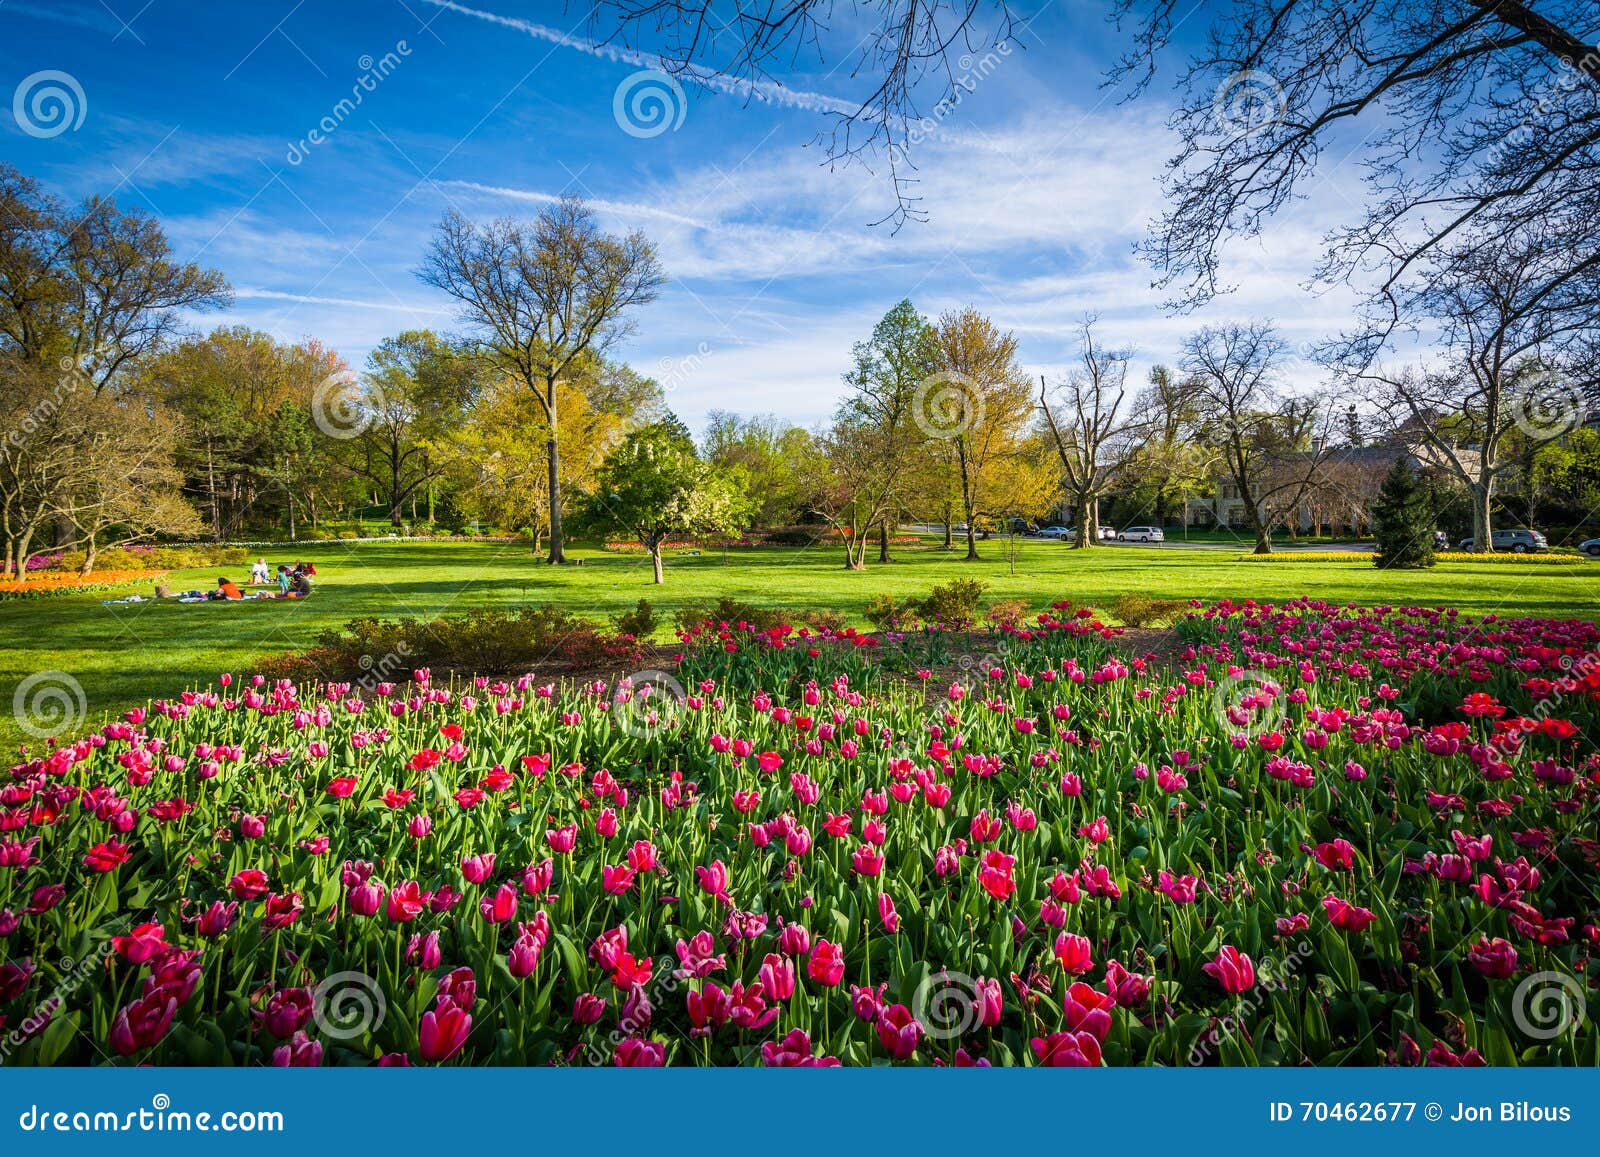 Tulips At Sherwood Gardens Park In Baltimore Maryland Stock